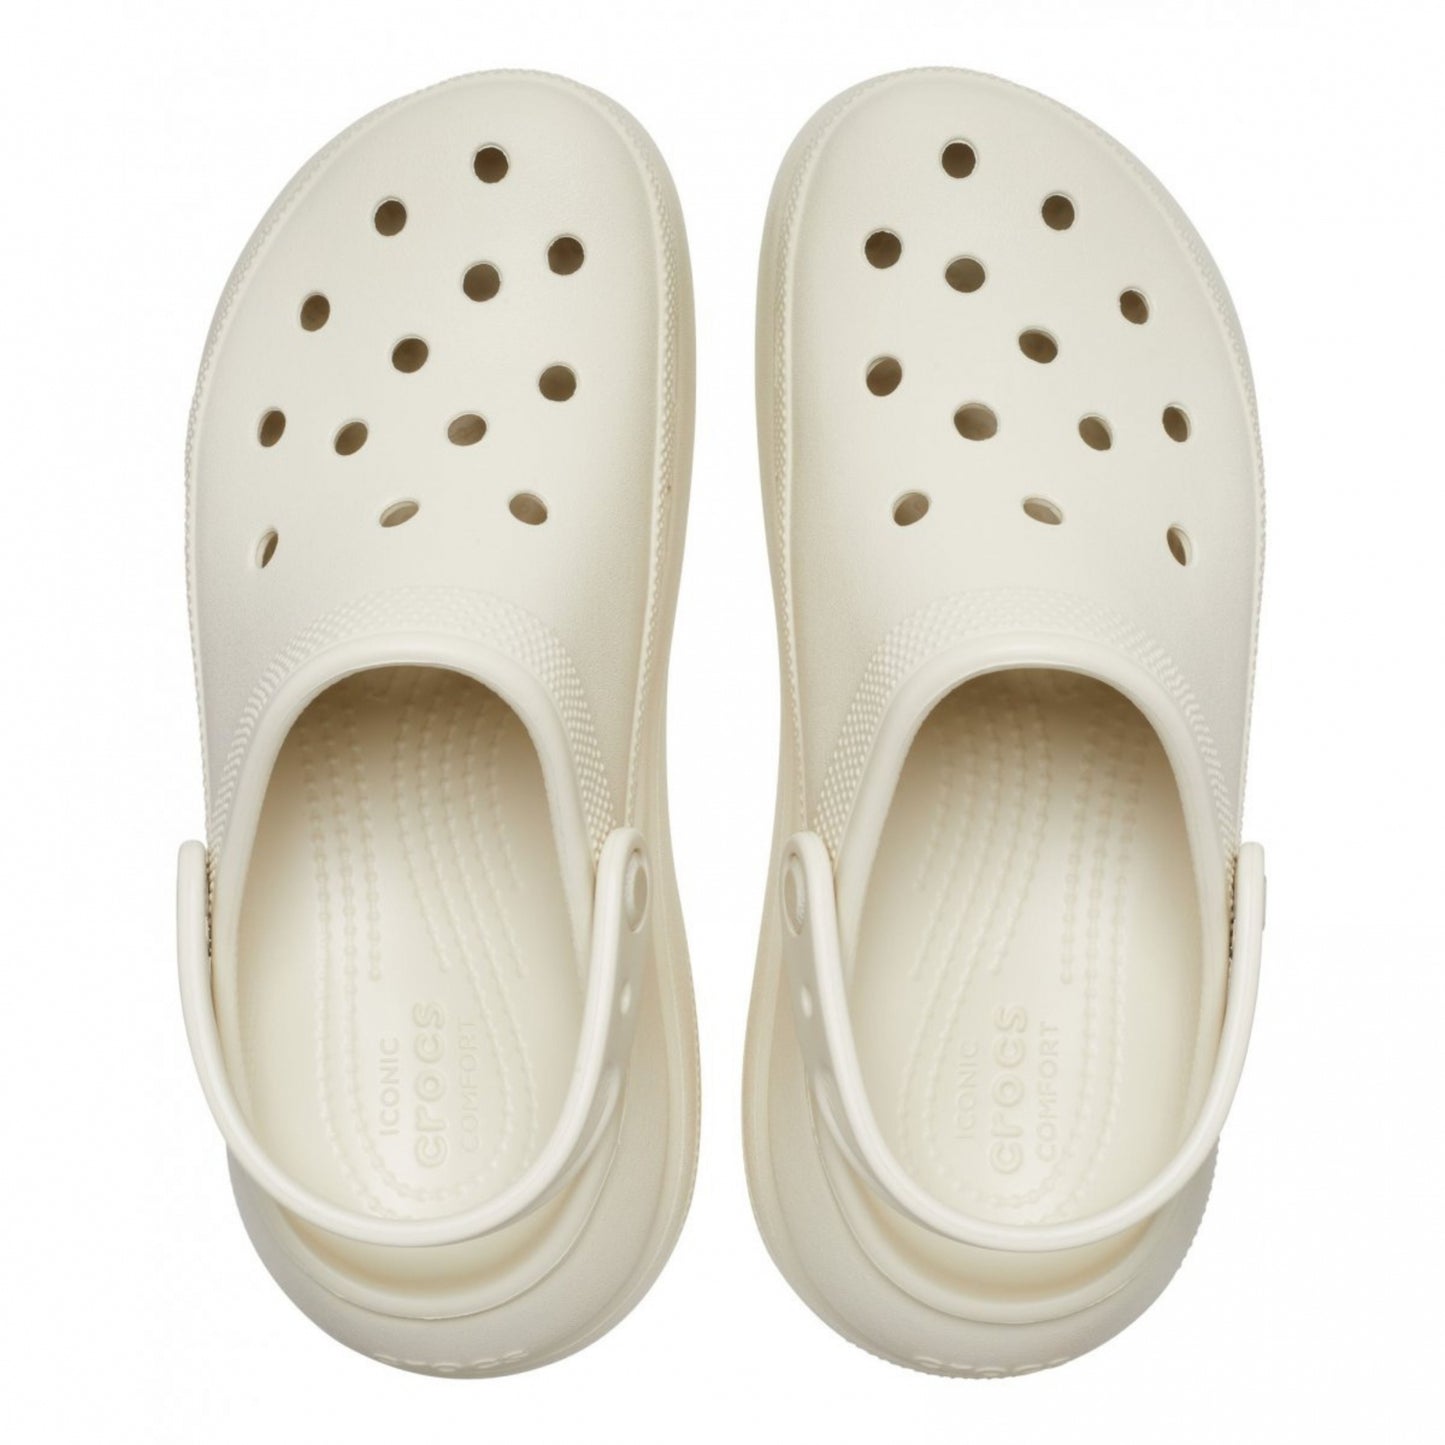 Crocs Classic Crush Clog UNIQUE slipper